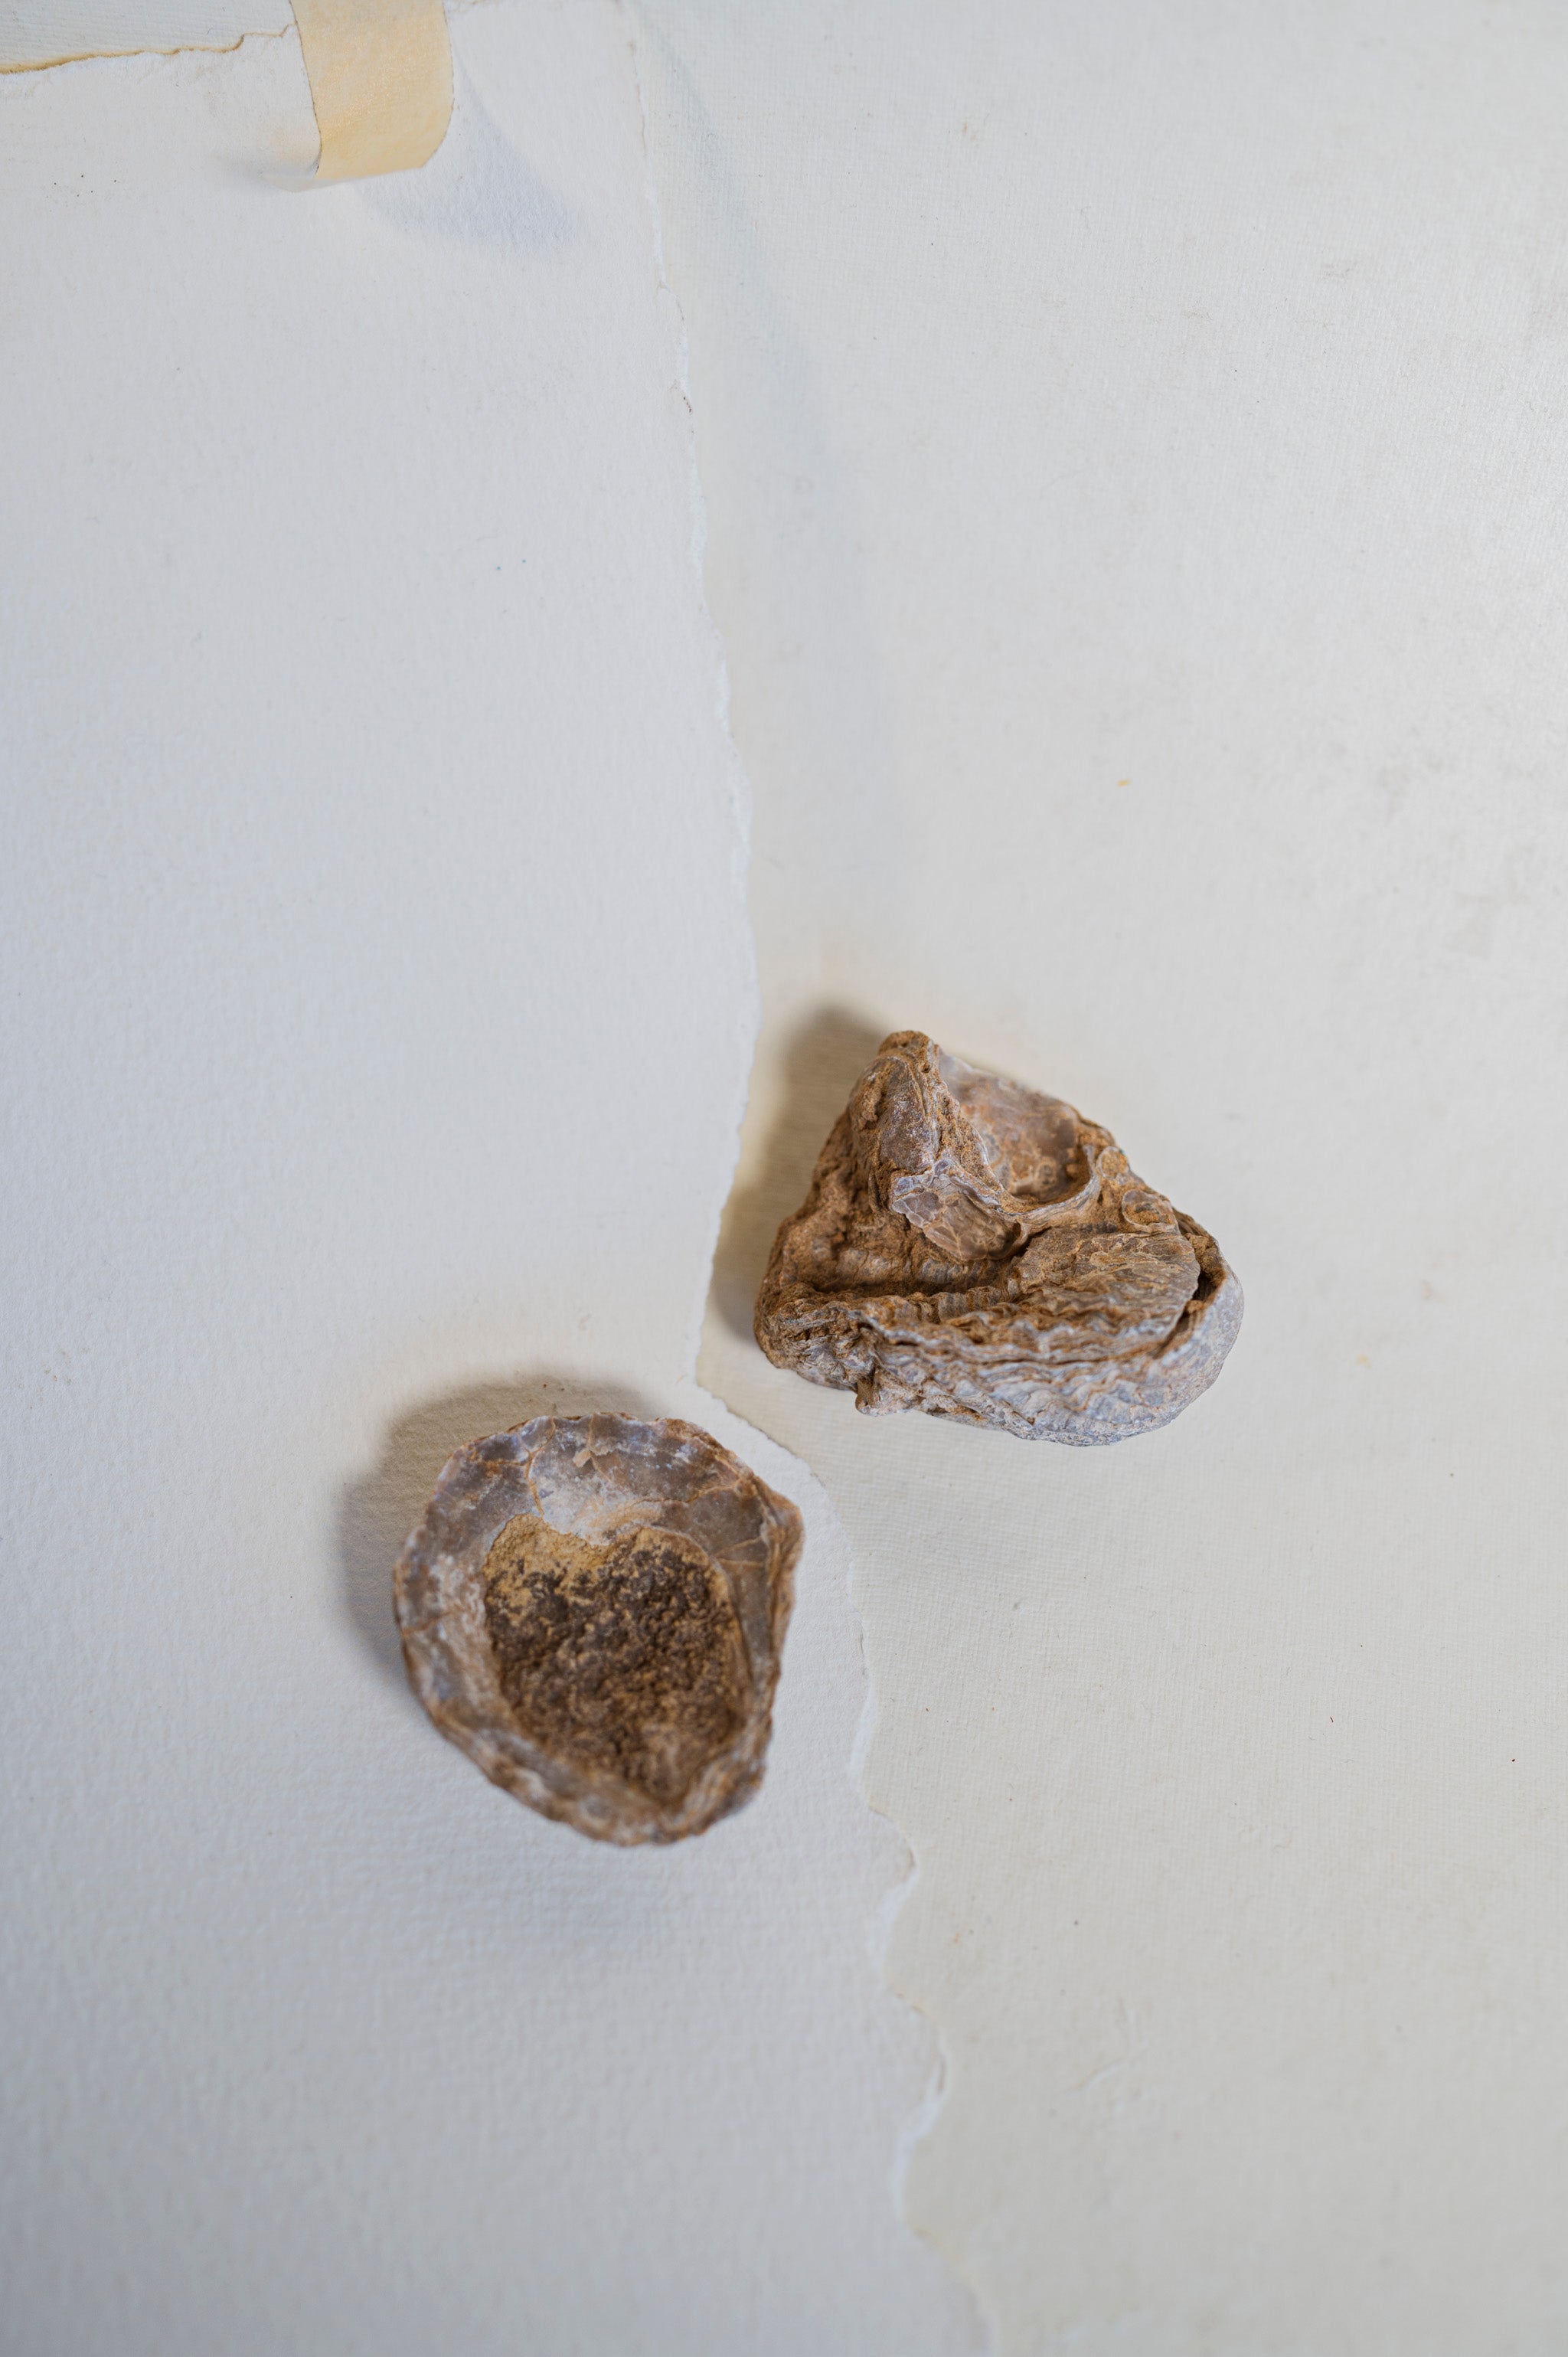 1-2.5" Fossilized Scallop Chesapecten Jeffersonius Shell, RM515